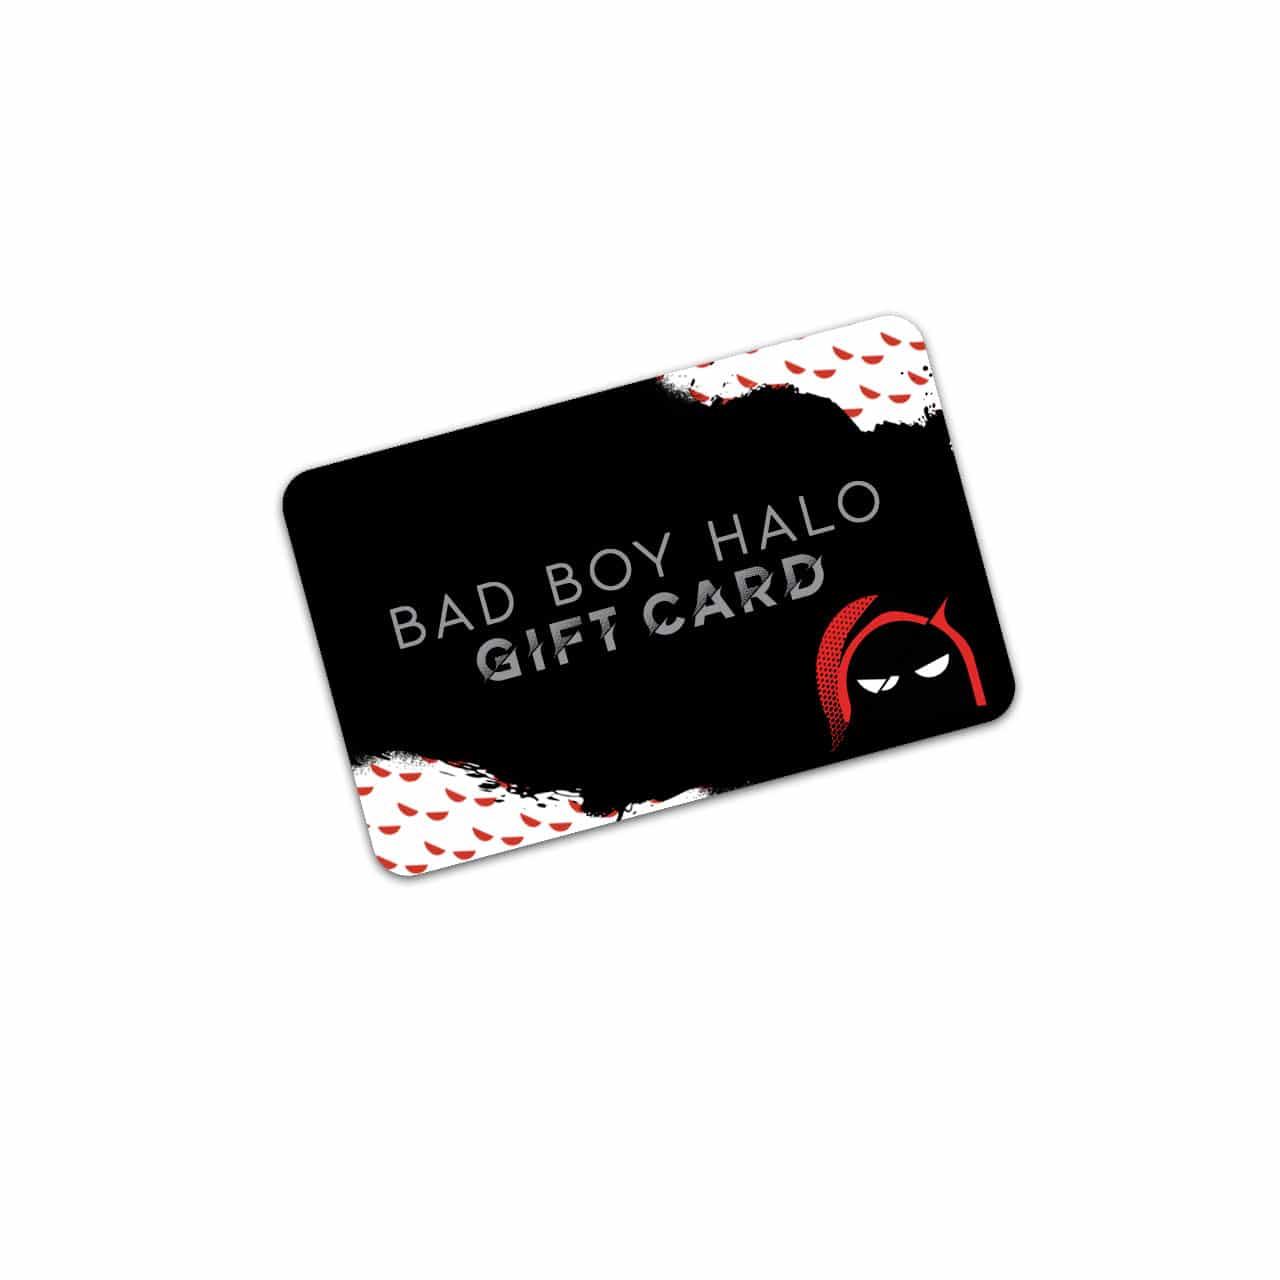 BadBoyHalo Gift Card